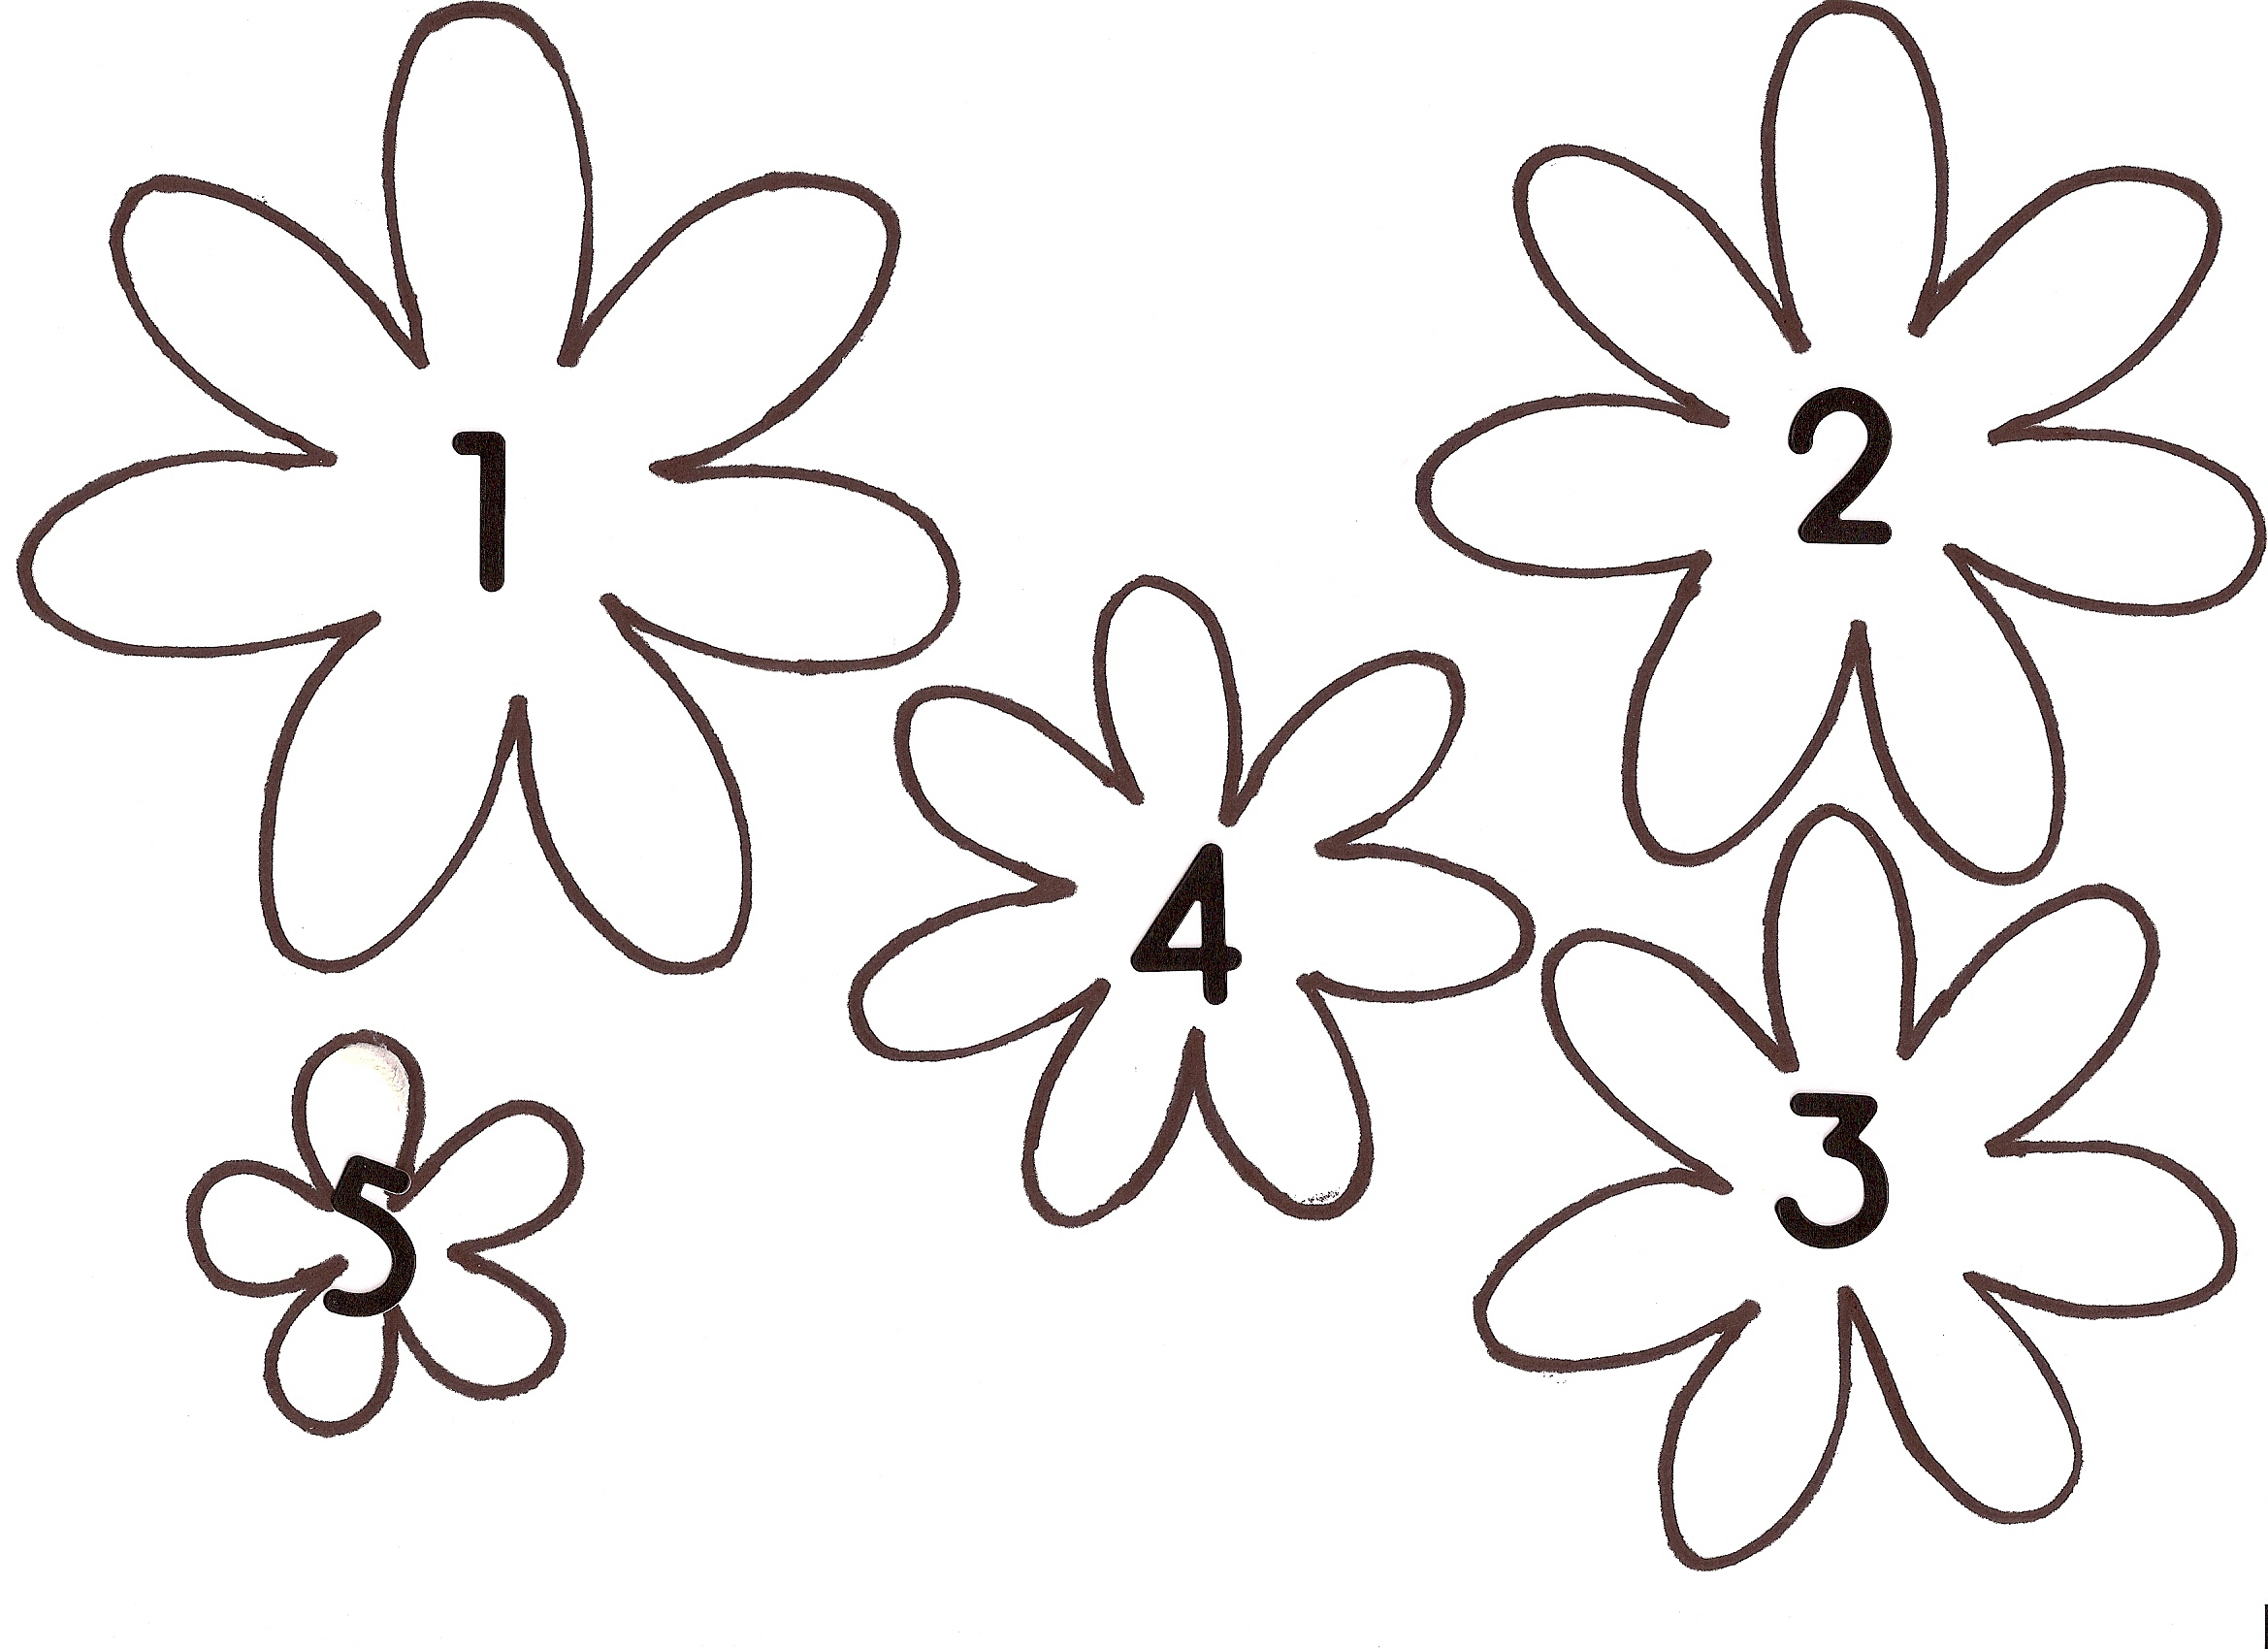 free-printable-felt-flower-patterns-fd1fcd4f2c0aea4a9bab39245546cee9